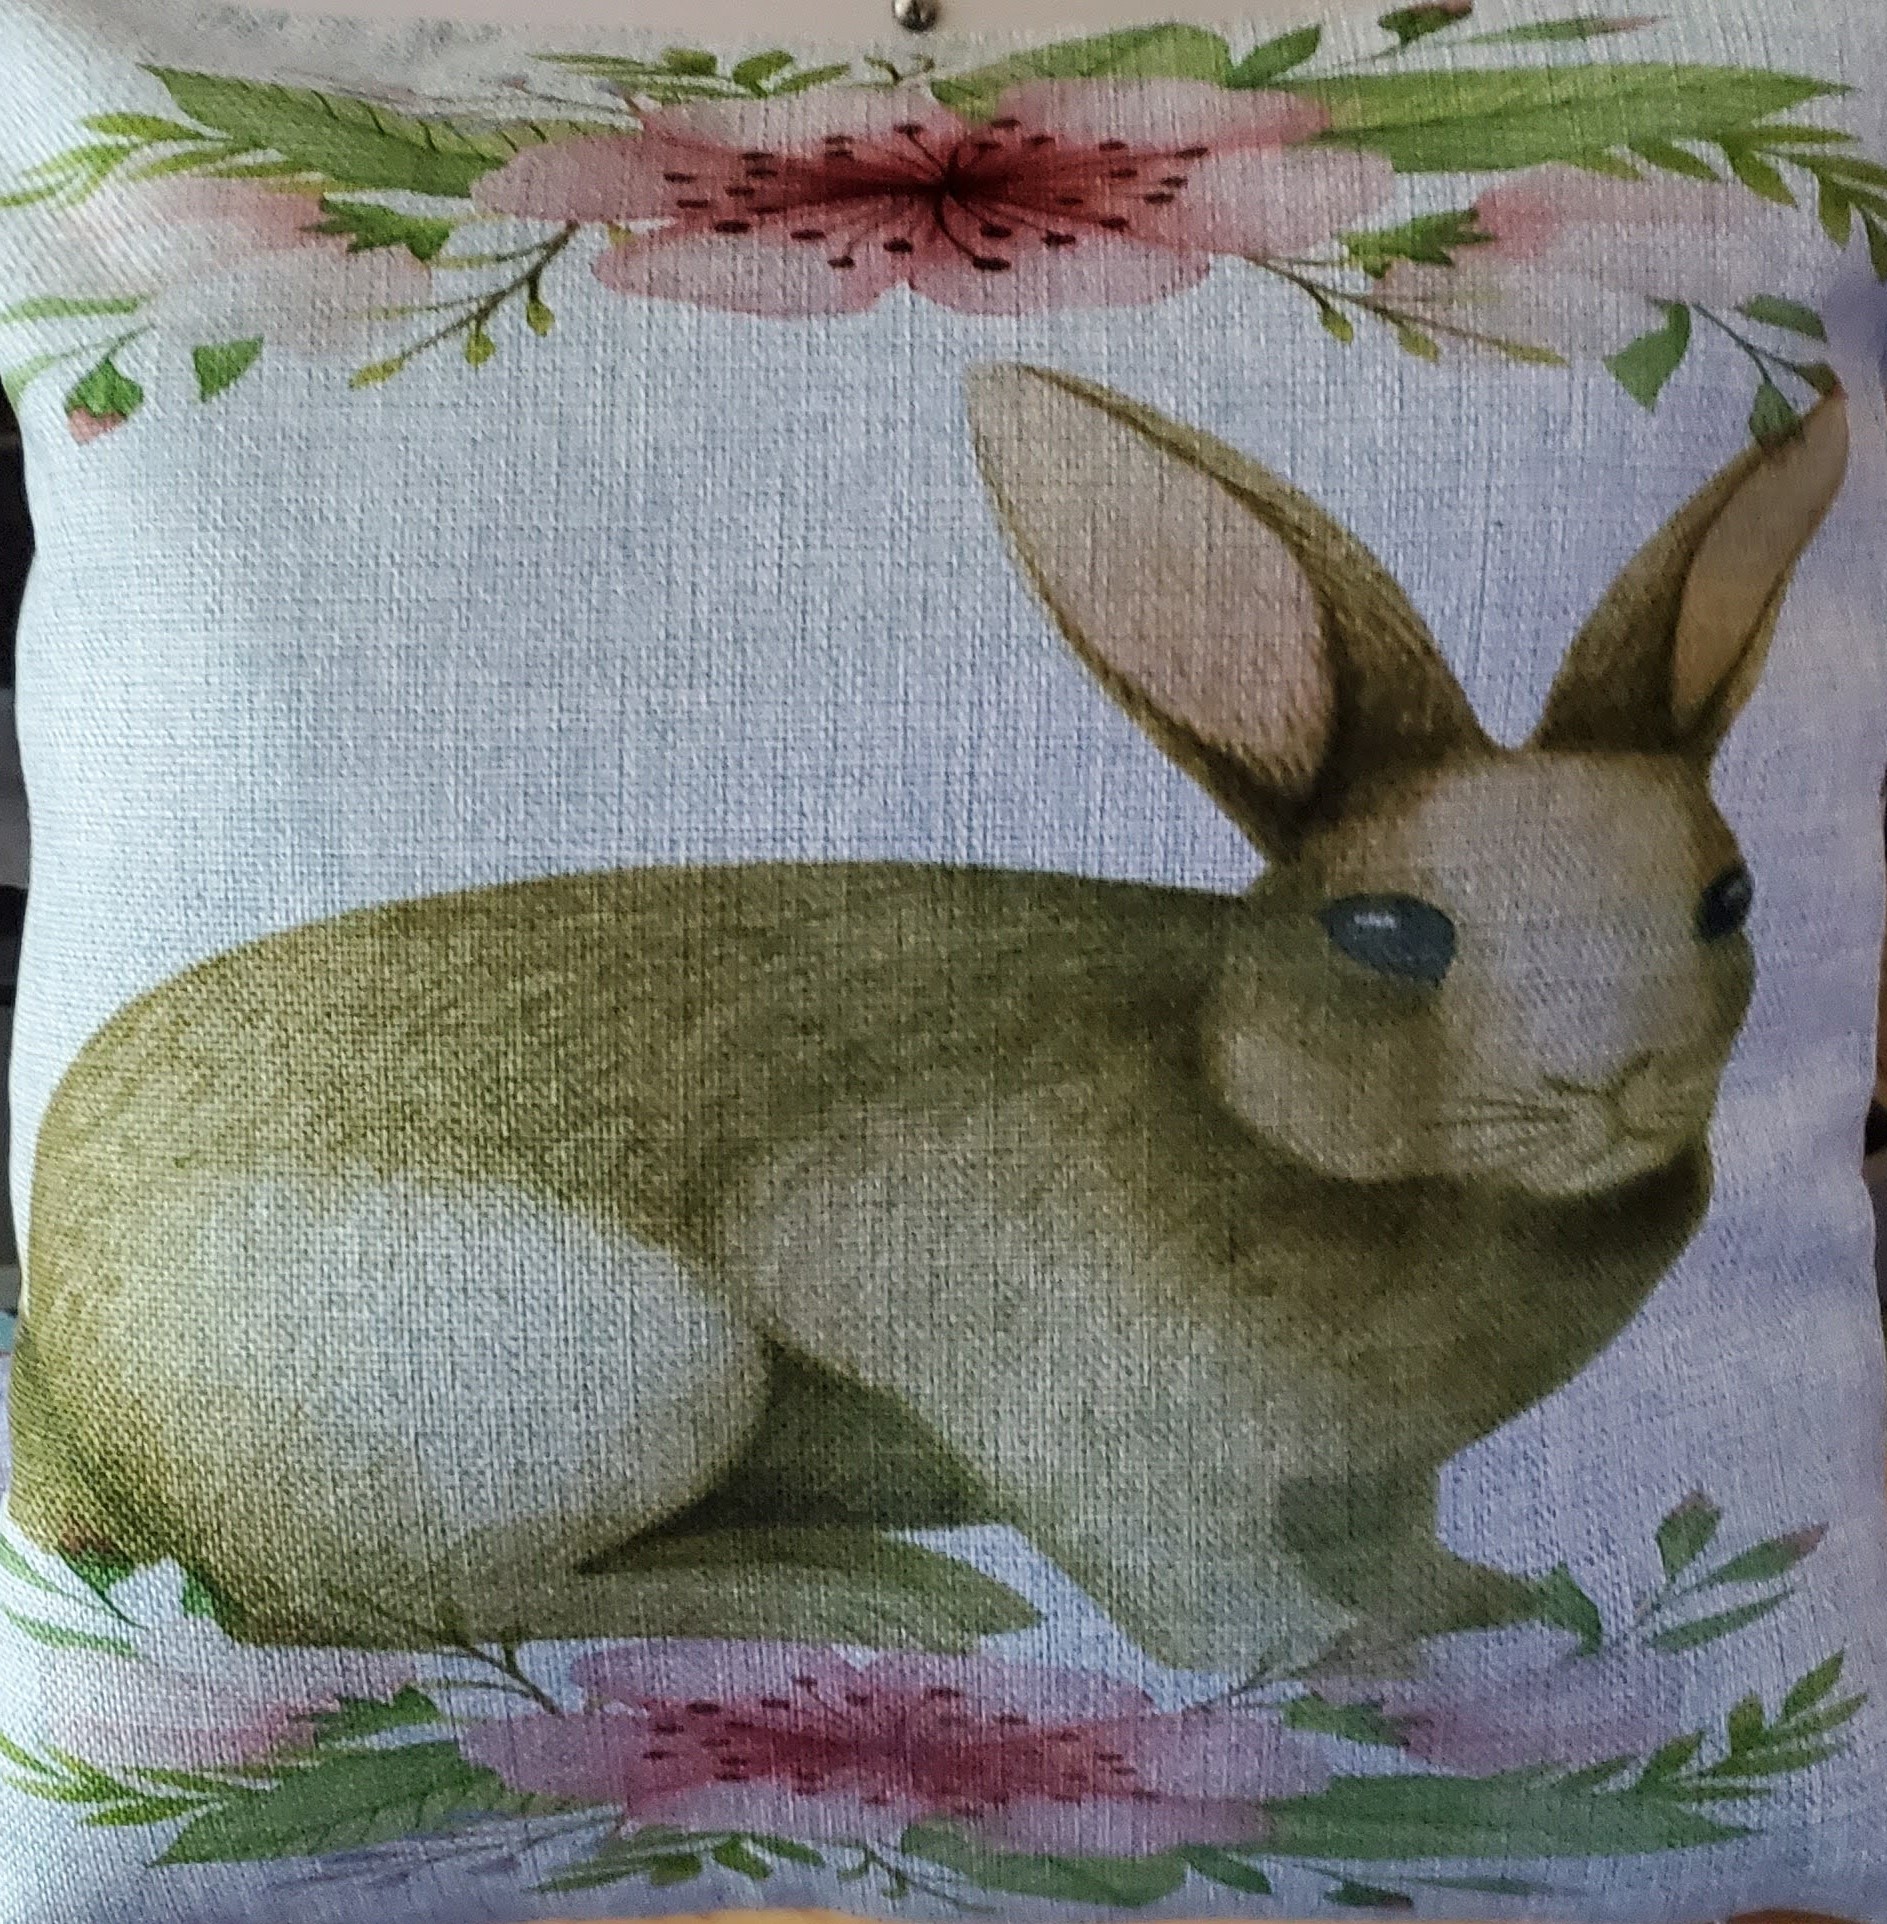 Springtime Bunny made with sublimation printing